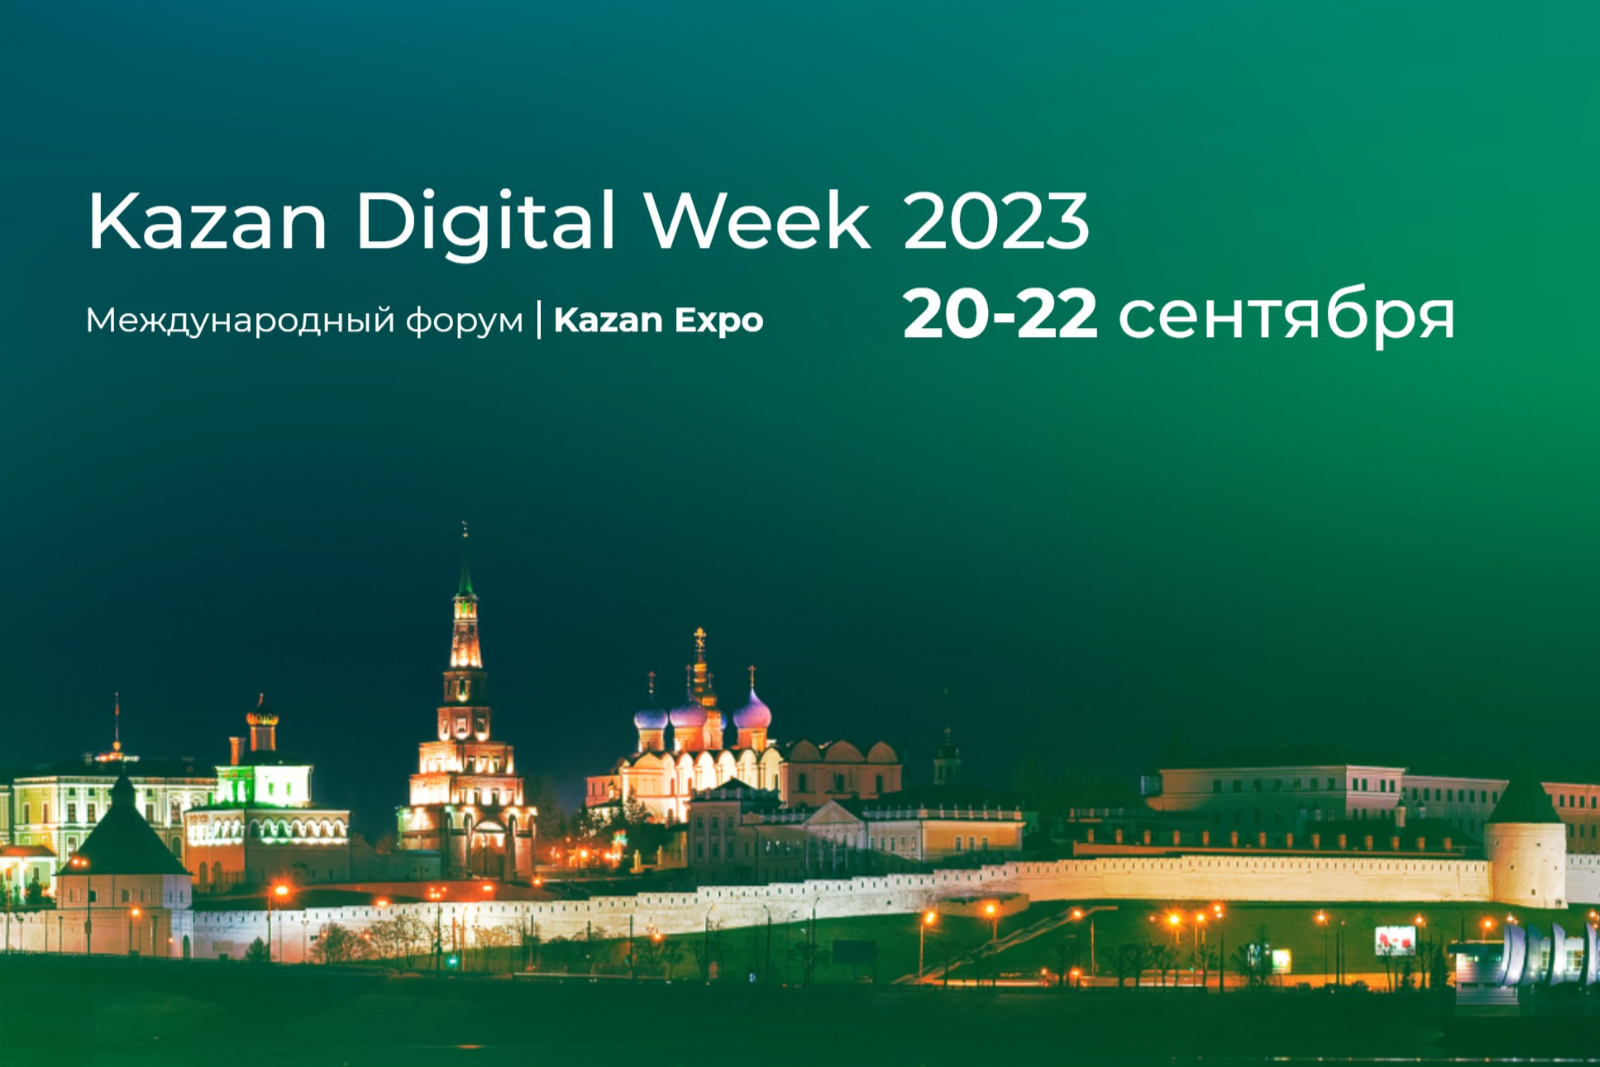 Kazan Digital week 2023. Казань Дигитал. Международный форум Казань диджитал Вик 2023. Казань форум.